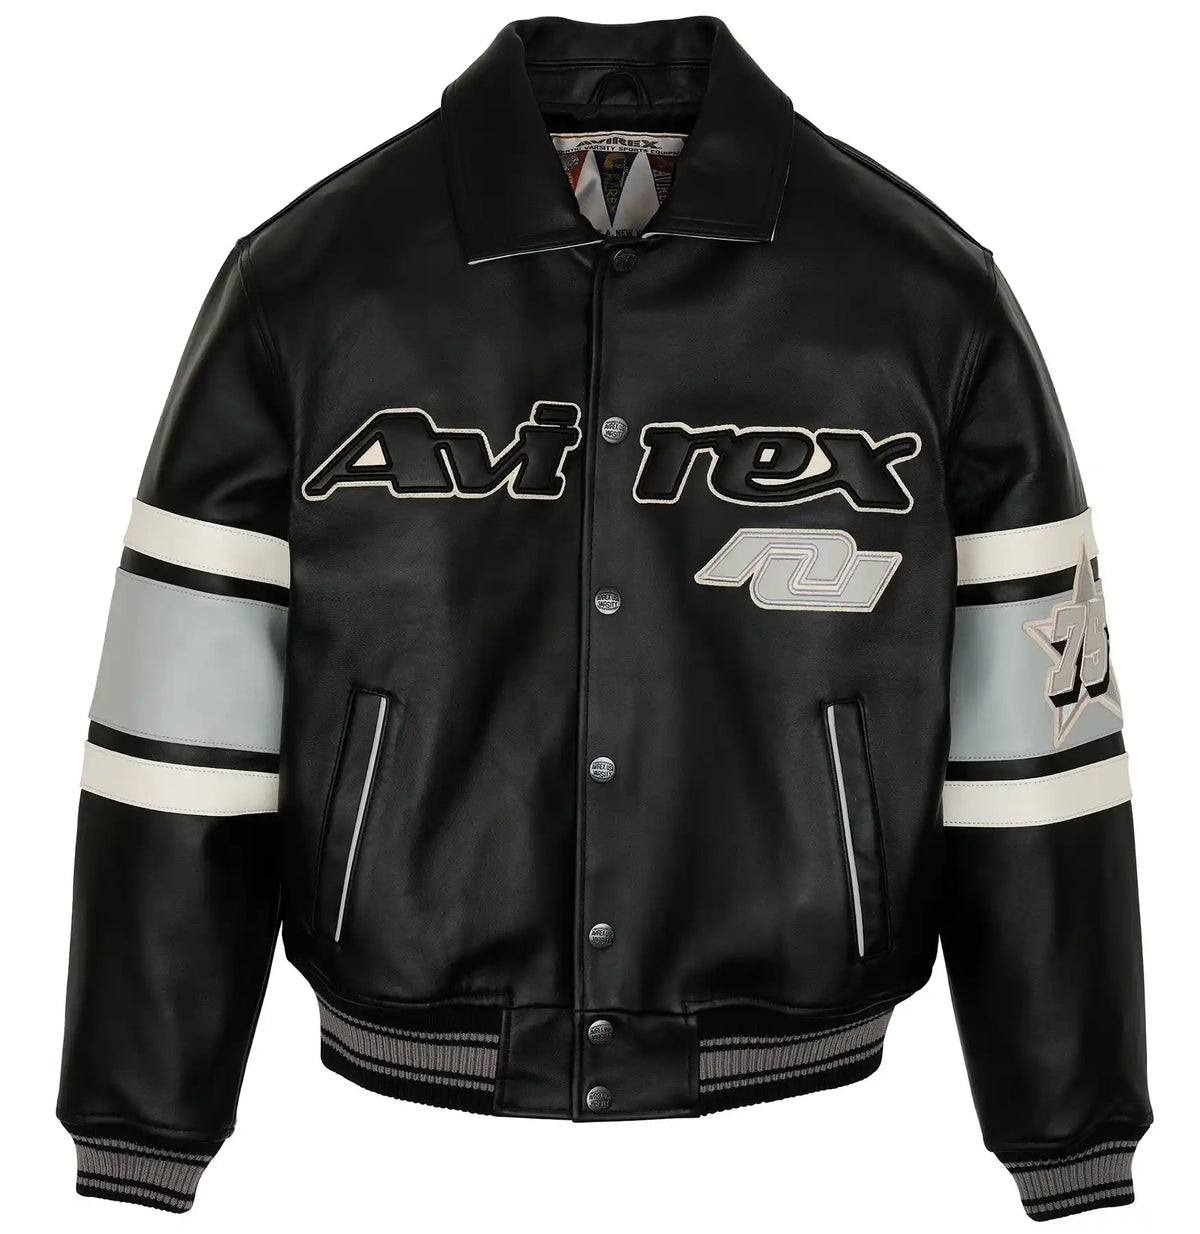 avirex-city-series-las-vegas-jacket-front